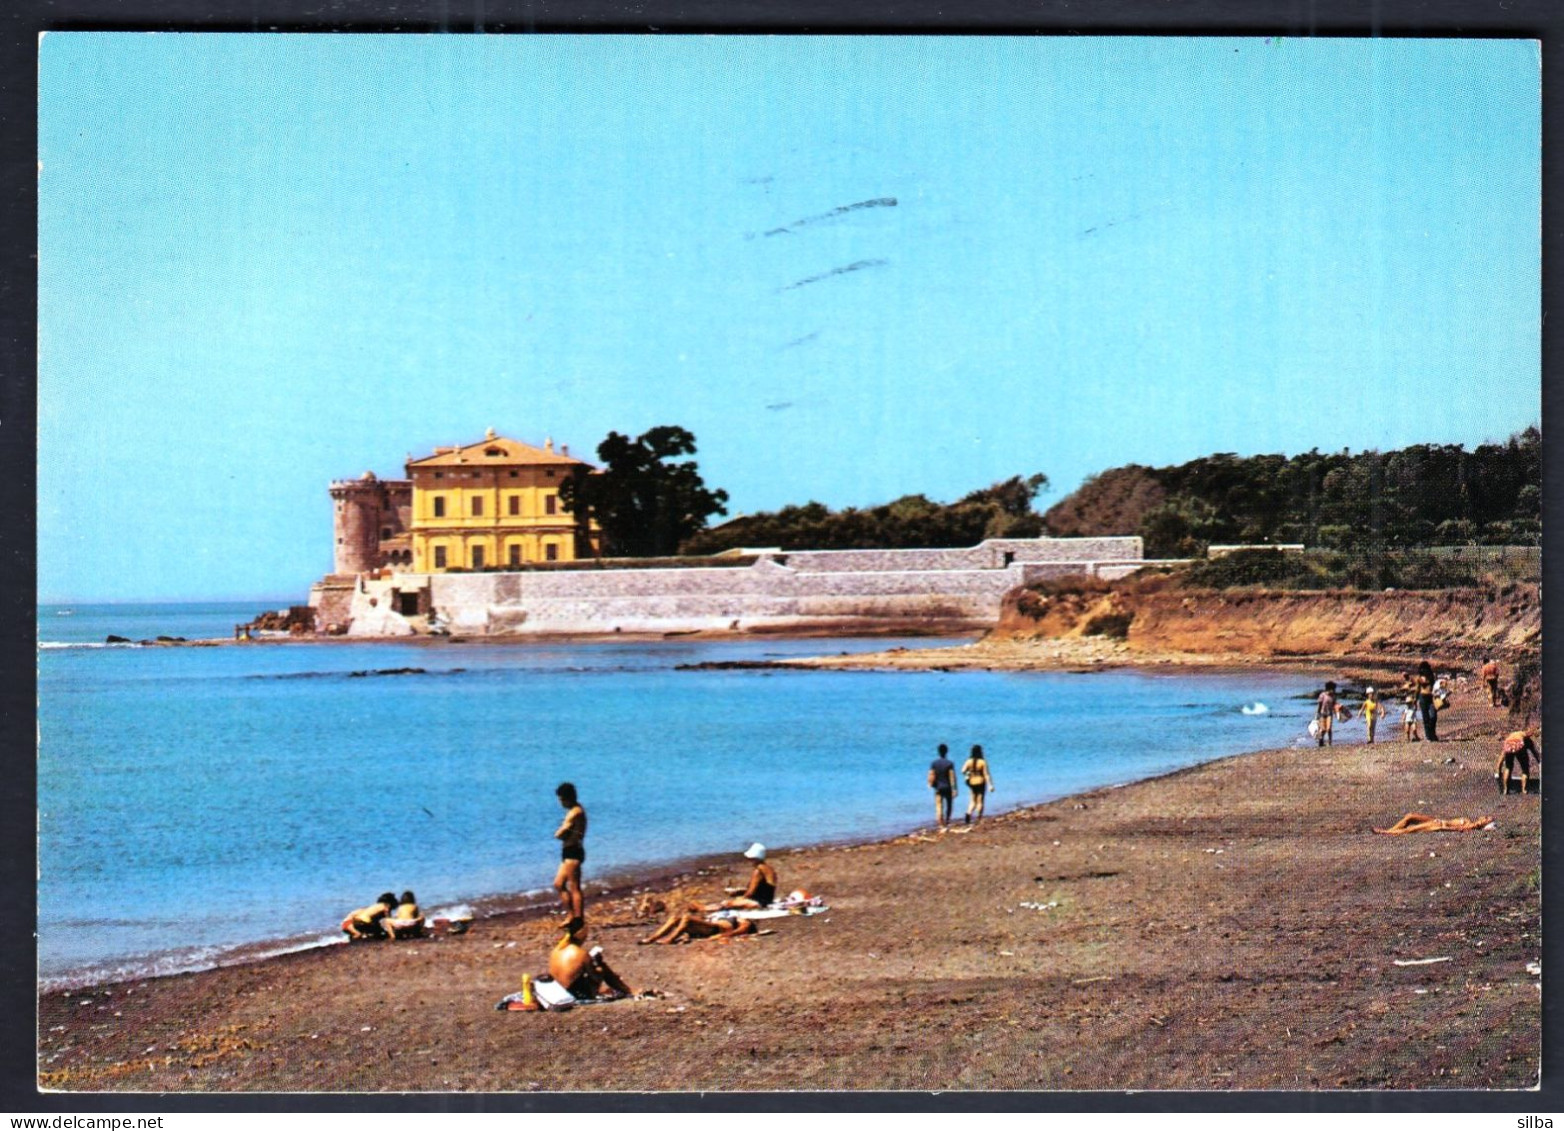 Italy Roma Rome 1974 / Marina Di S. Nicola / Panorama, Beach - Panoramische Zichten, Meerdere Zichten